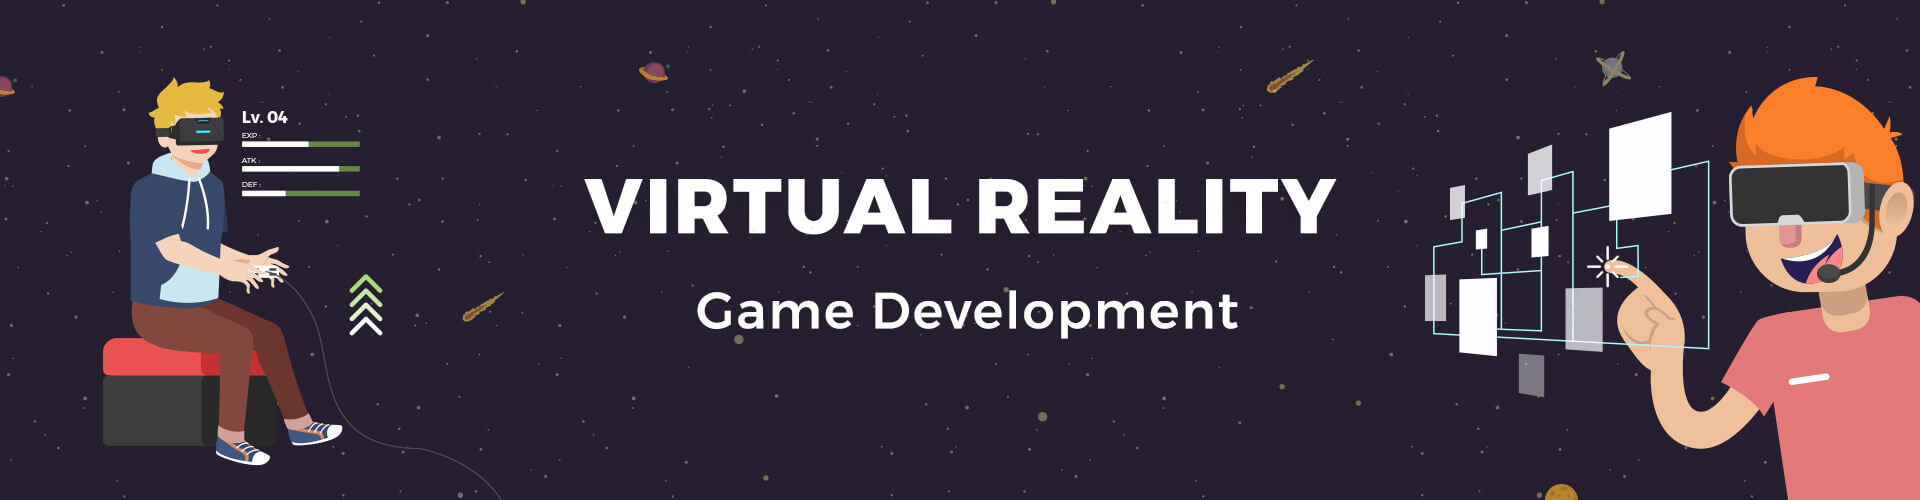 virtual reality game development